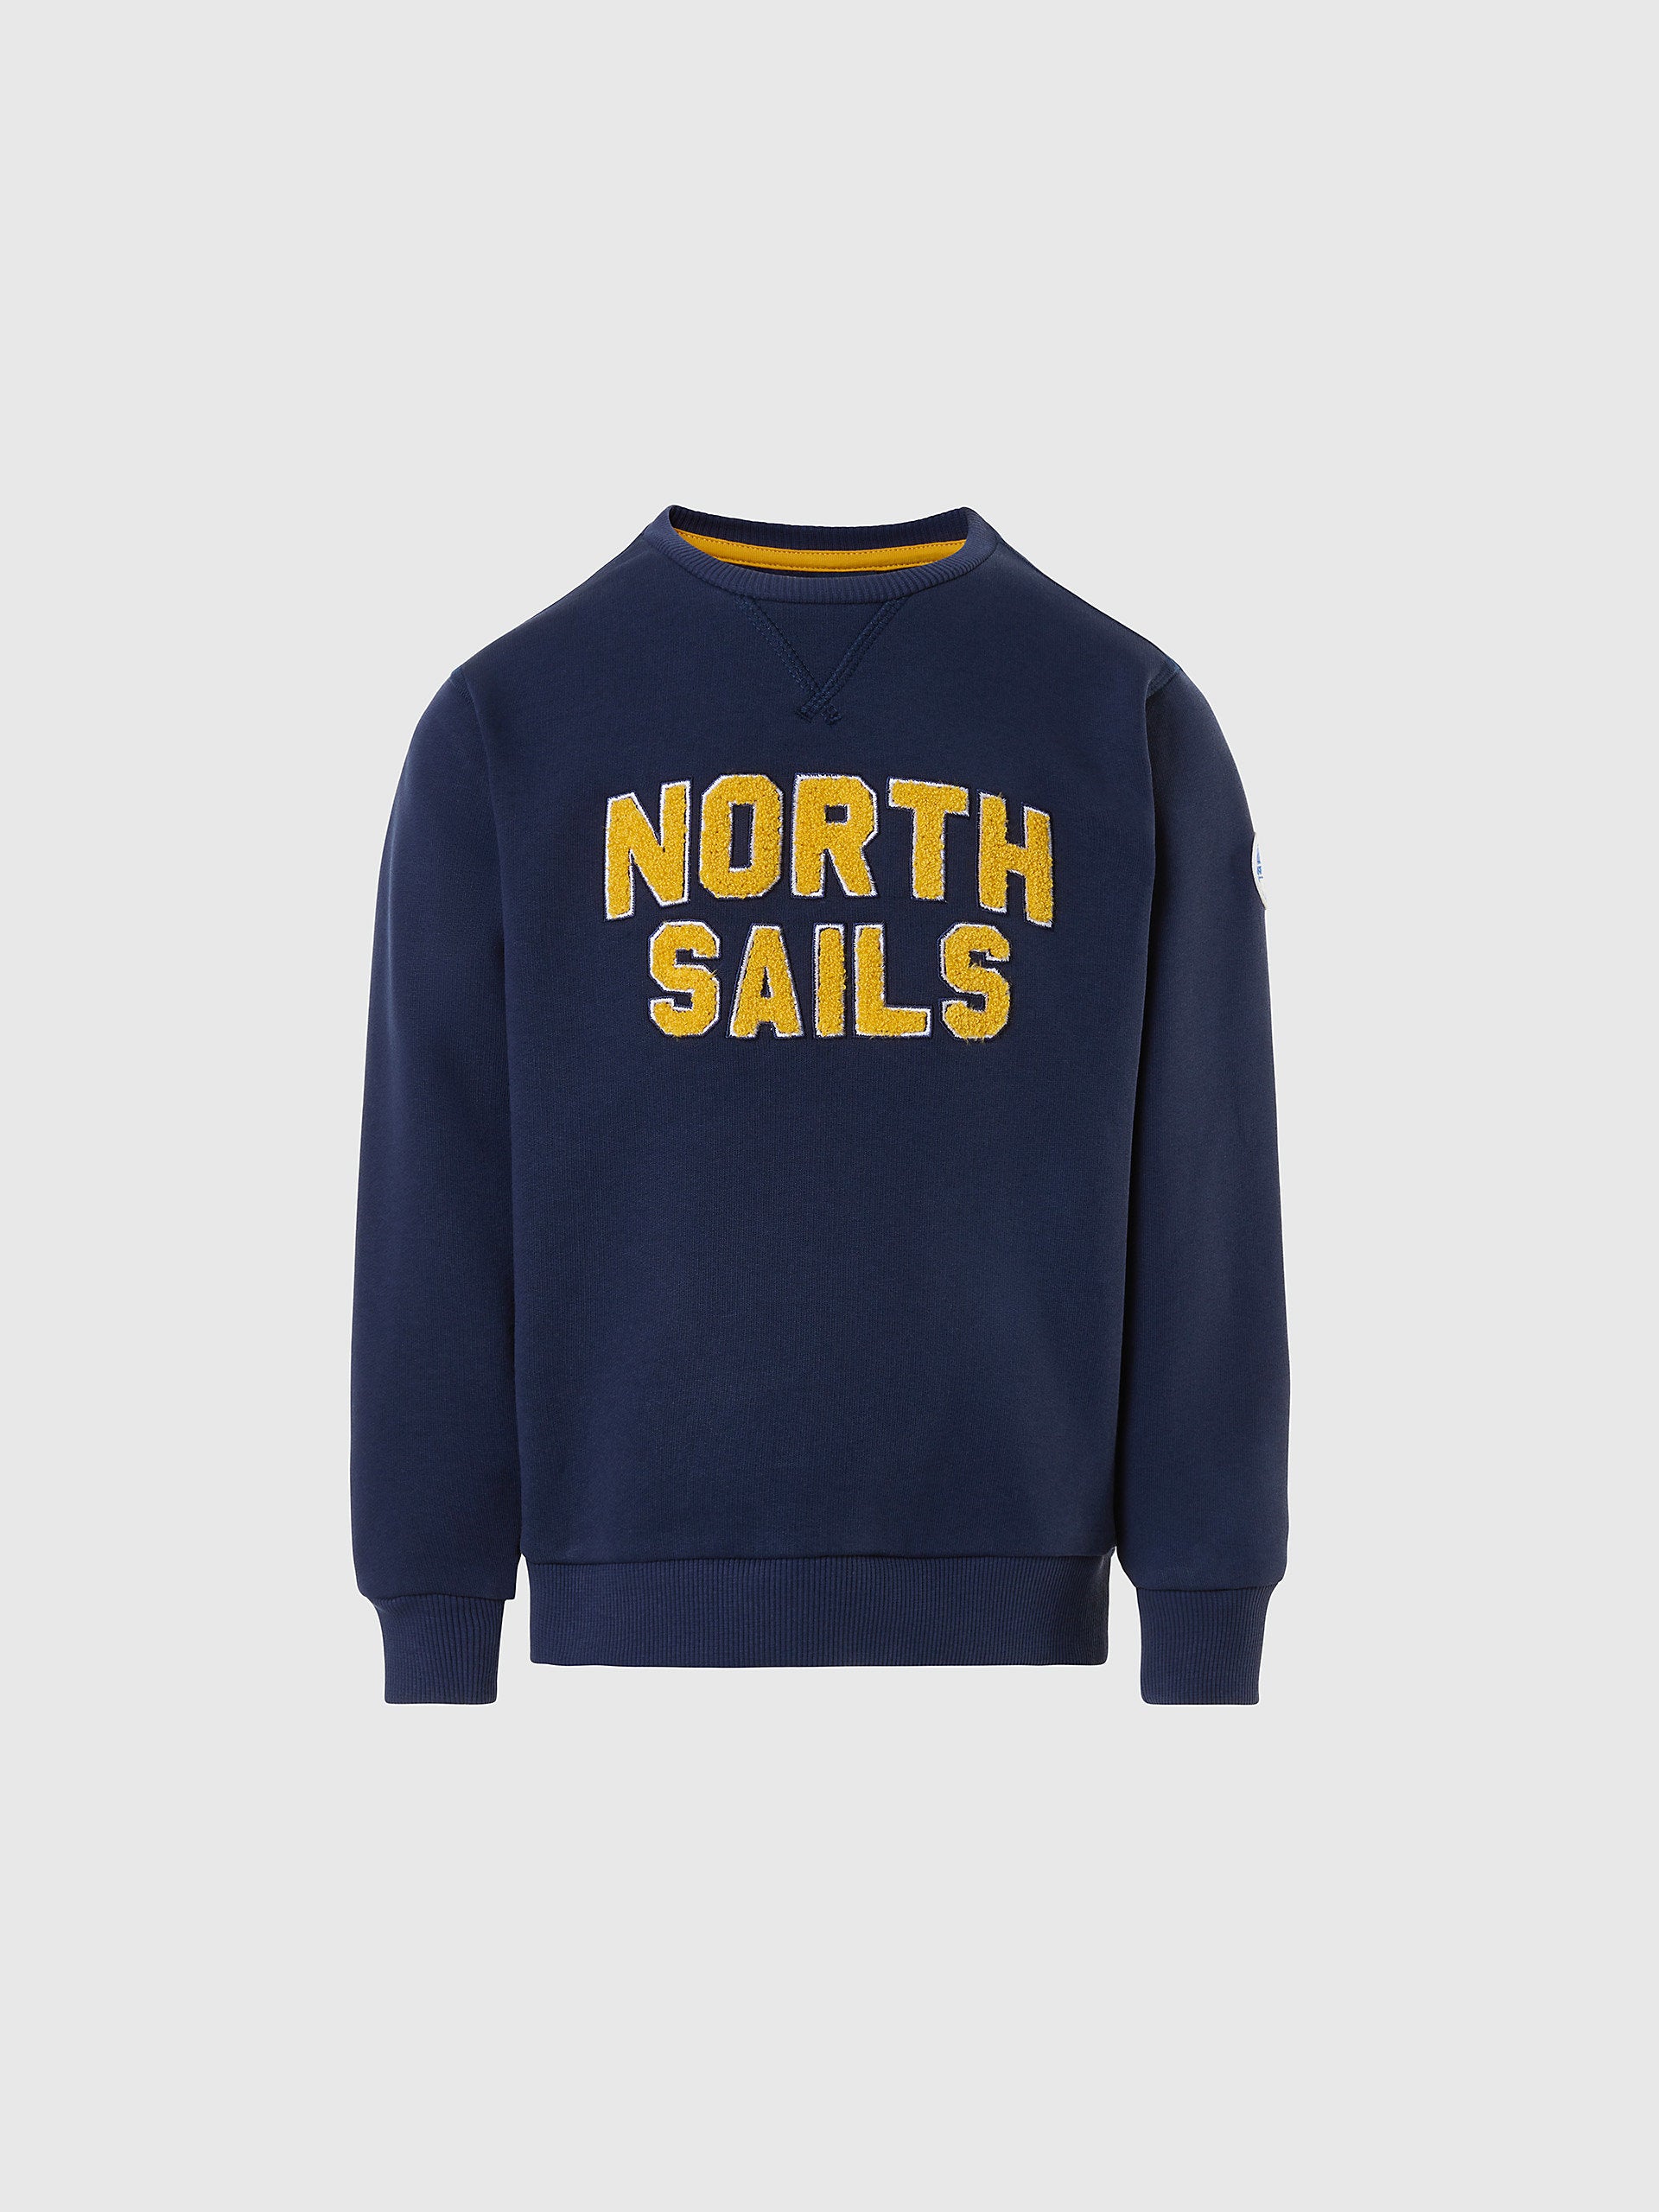 North Sails - Felpa con letteringNorth SailsNavy blue8